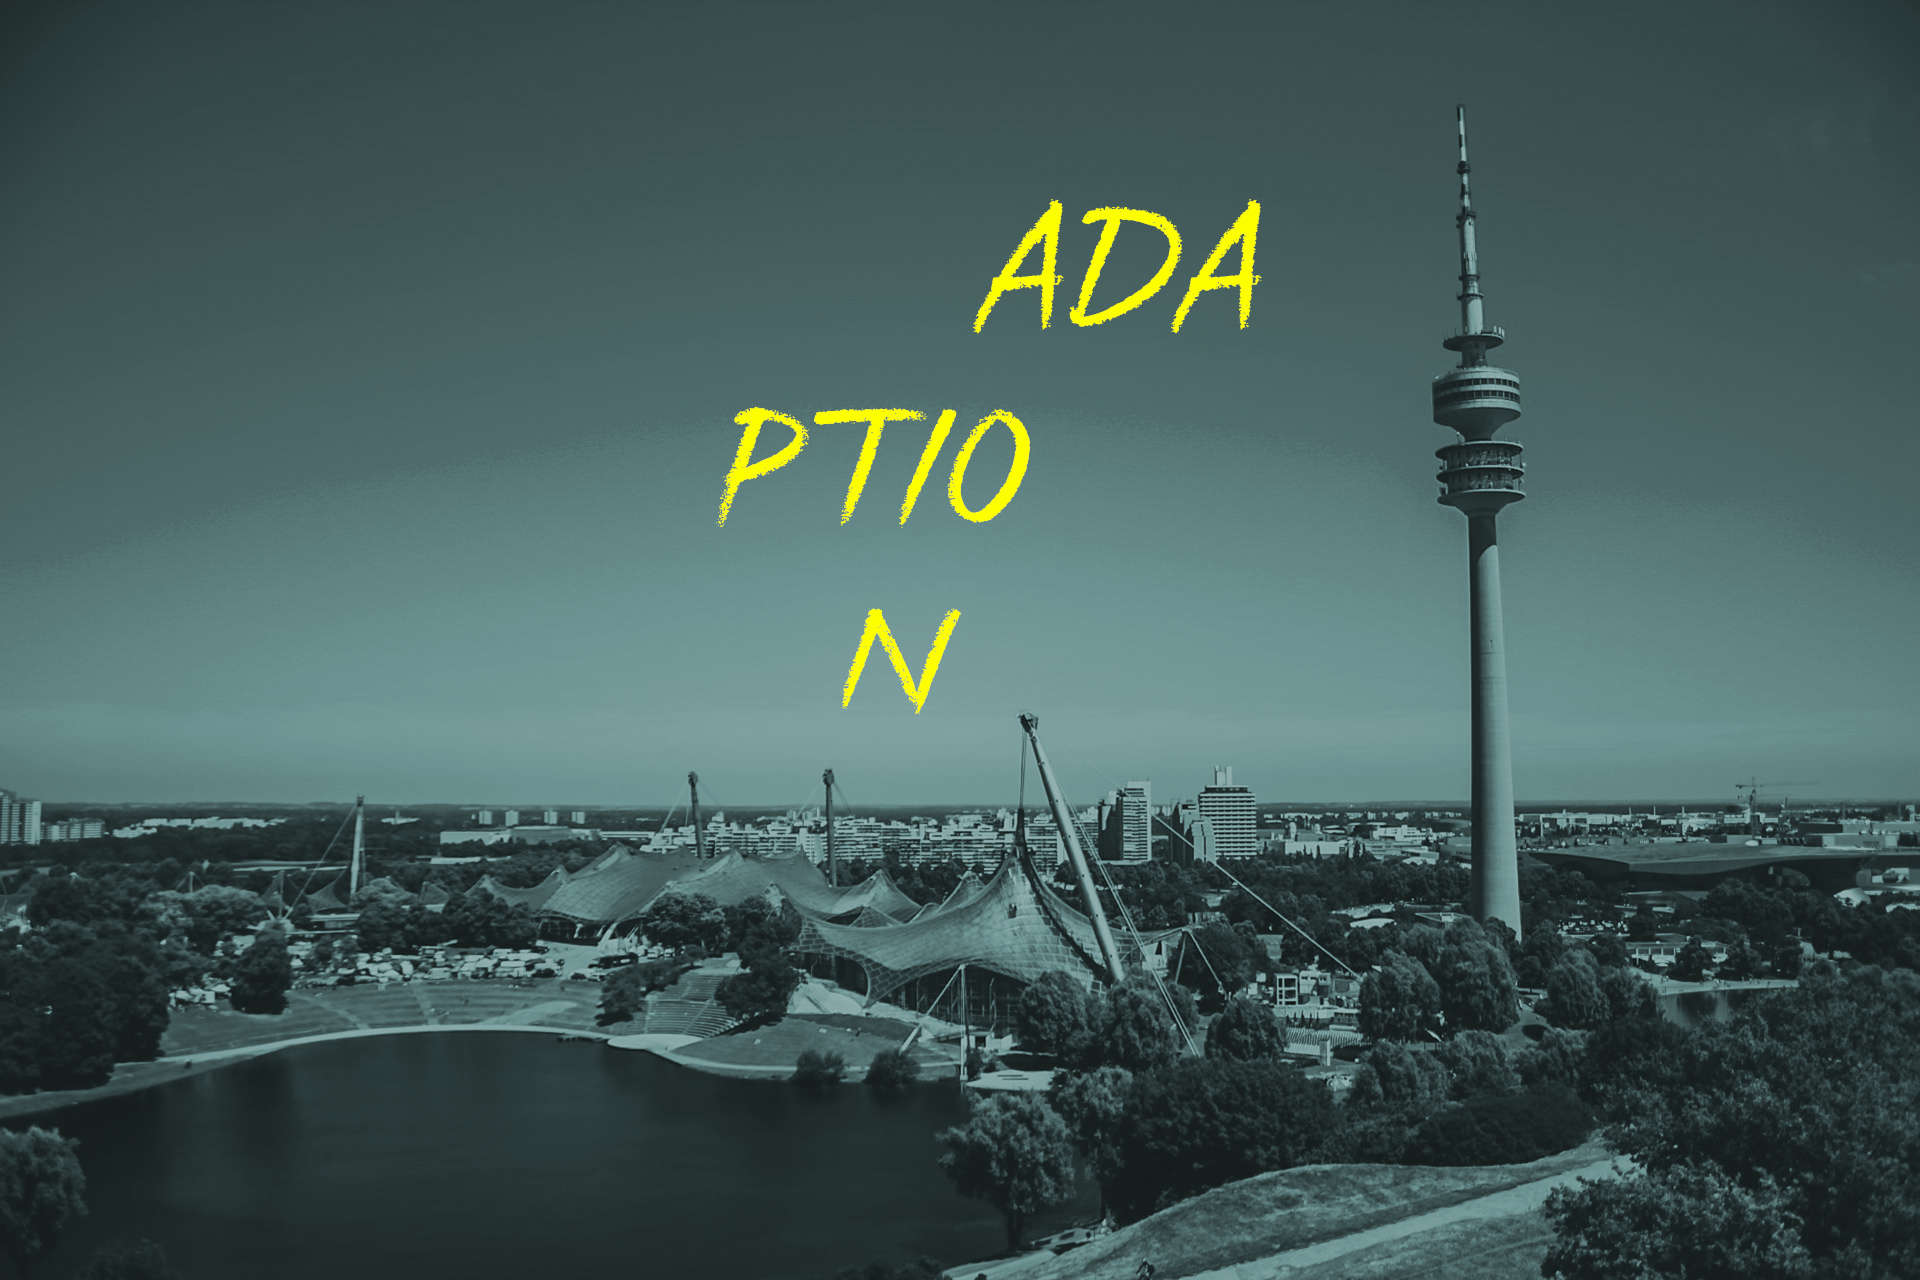 Skyline München, Fernsehturm; Text: ADA PTIO N